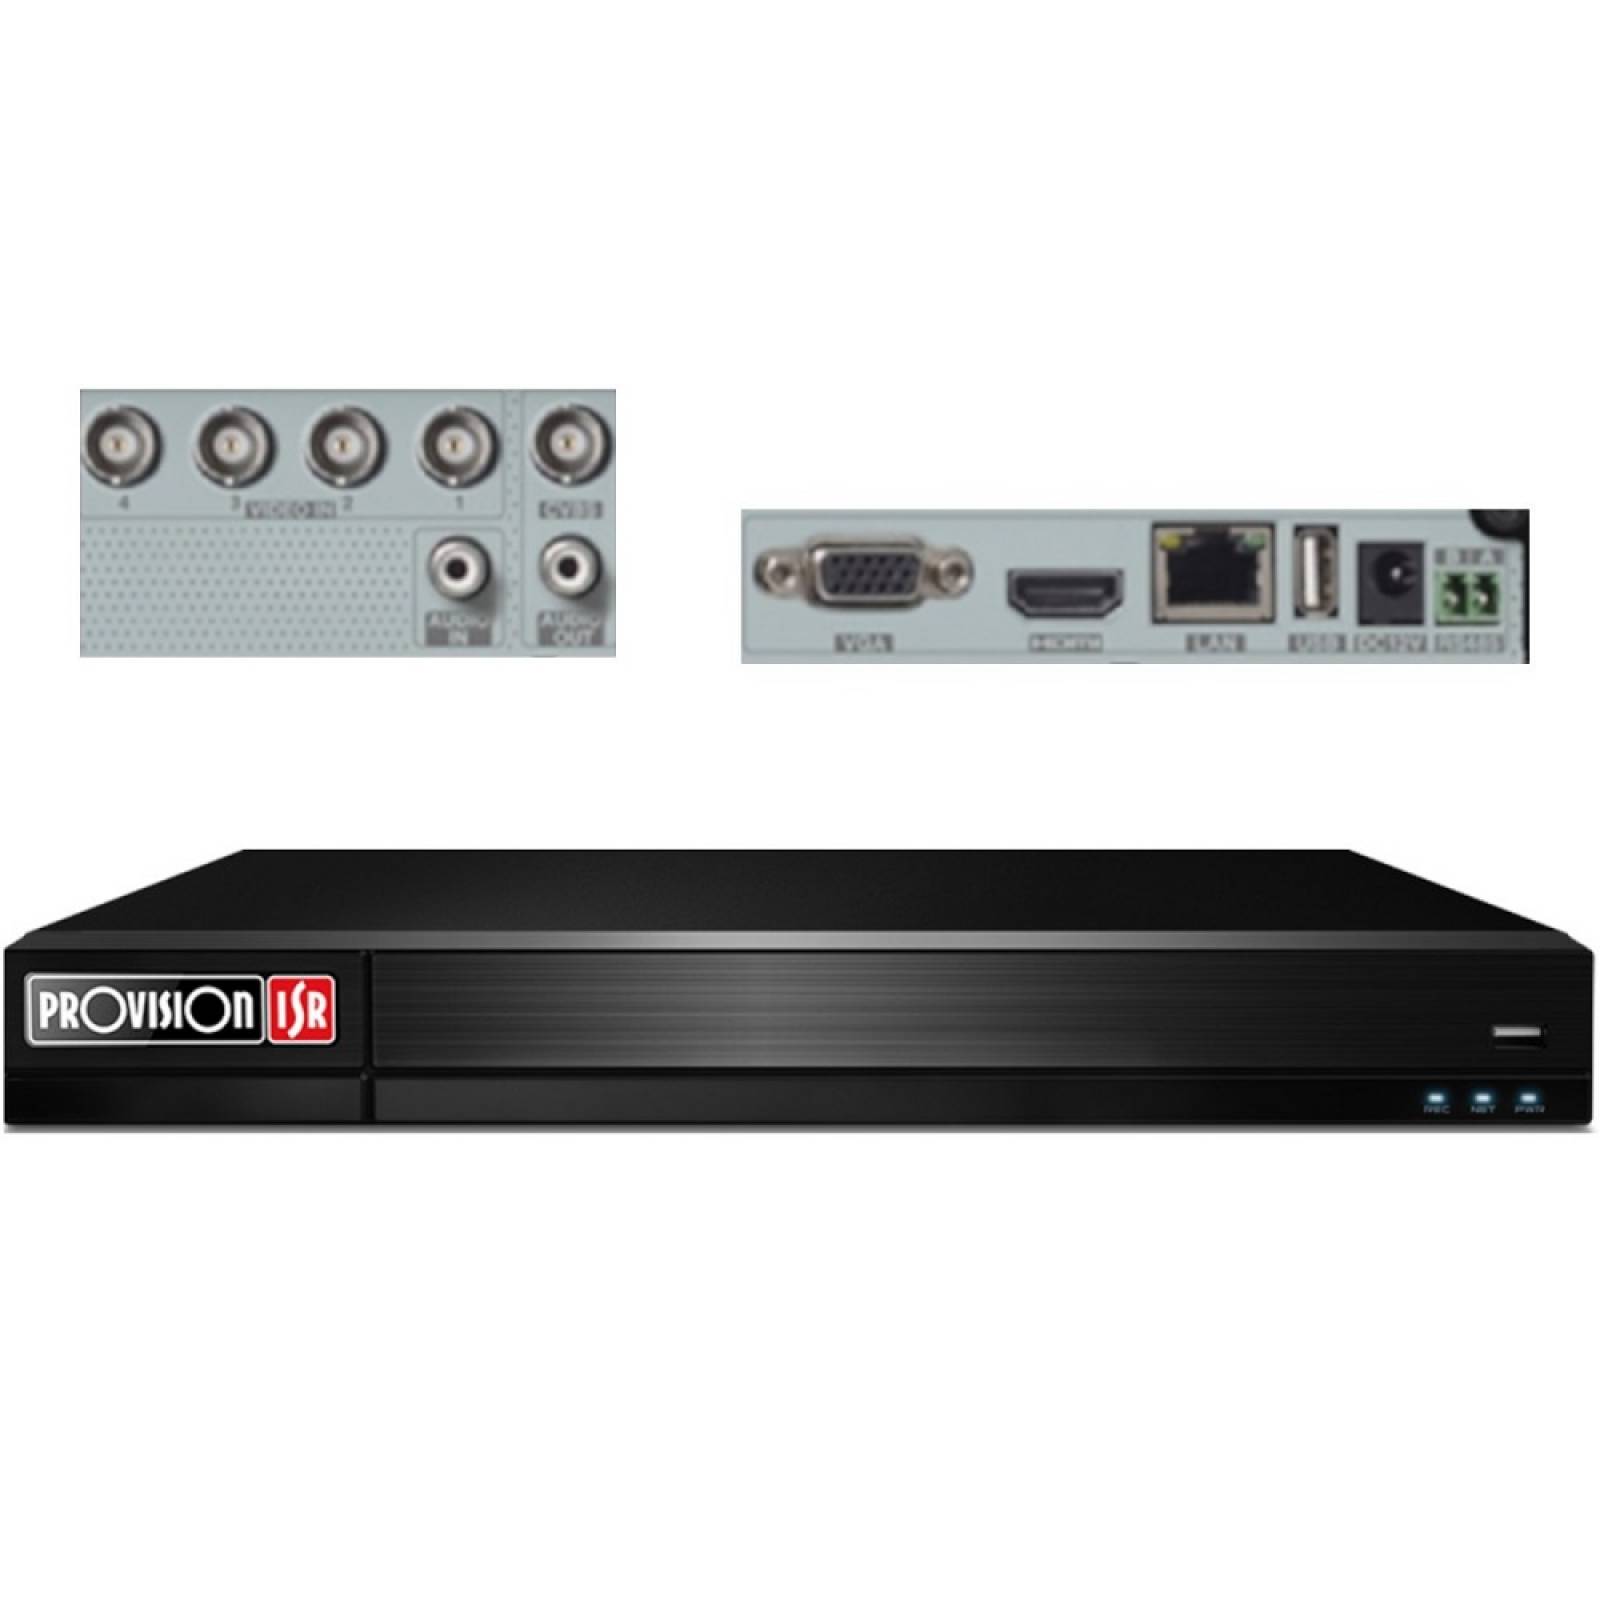 DVR Provision-ISR 4 Canales 1080p Lite 6TB SH-4100A-2L